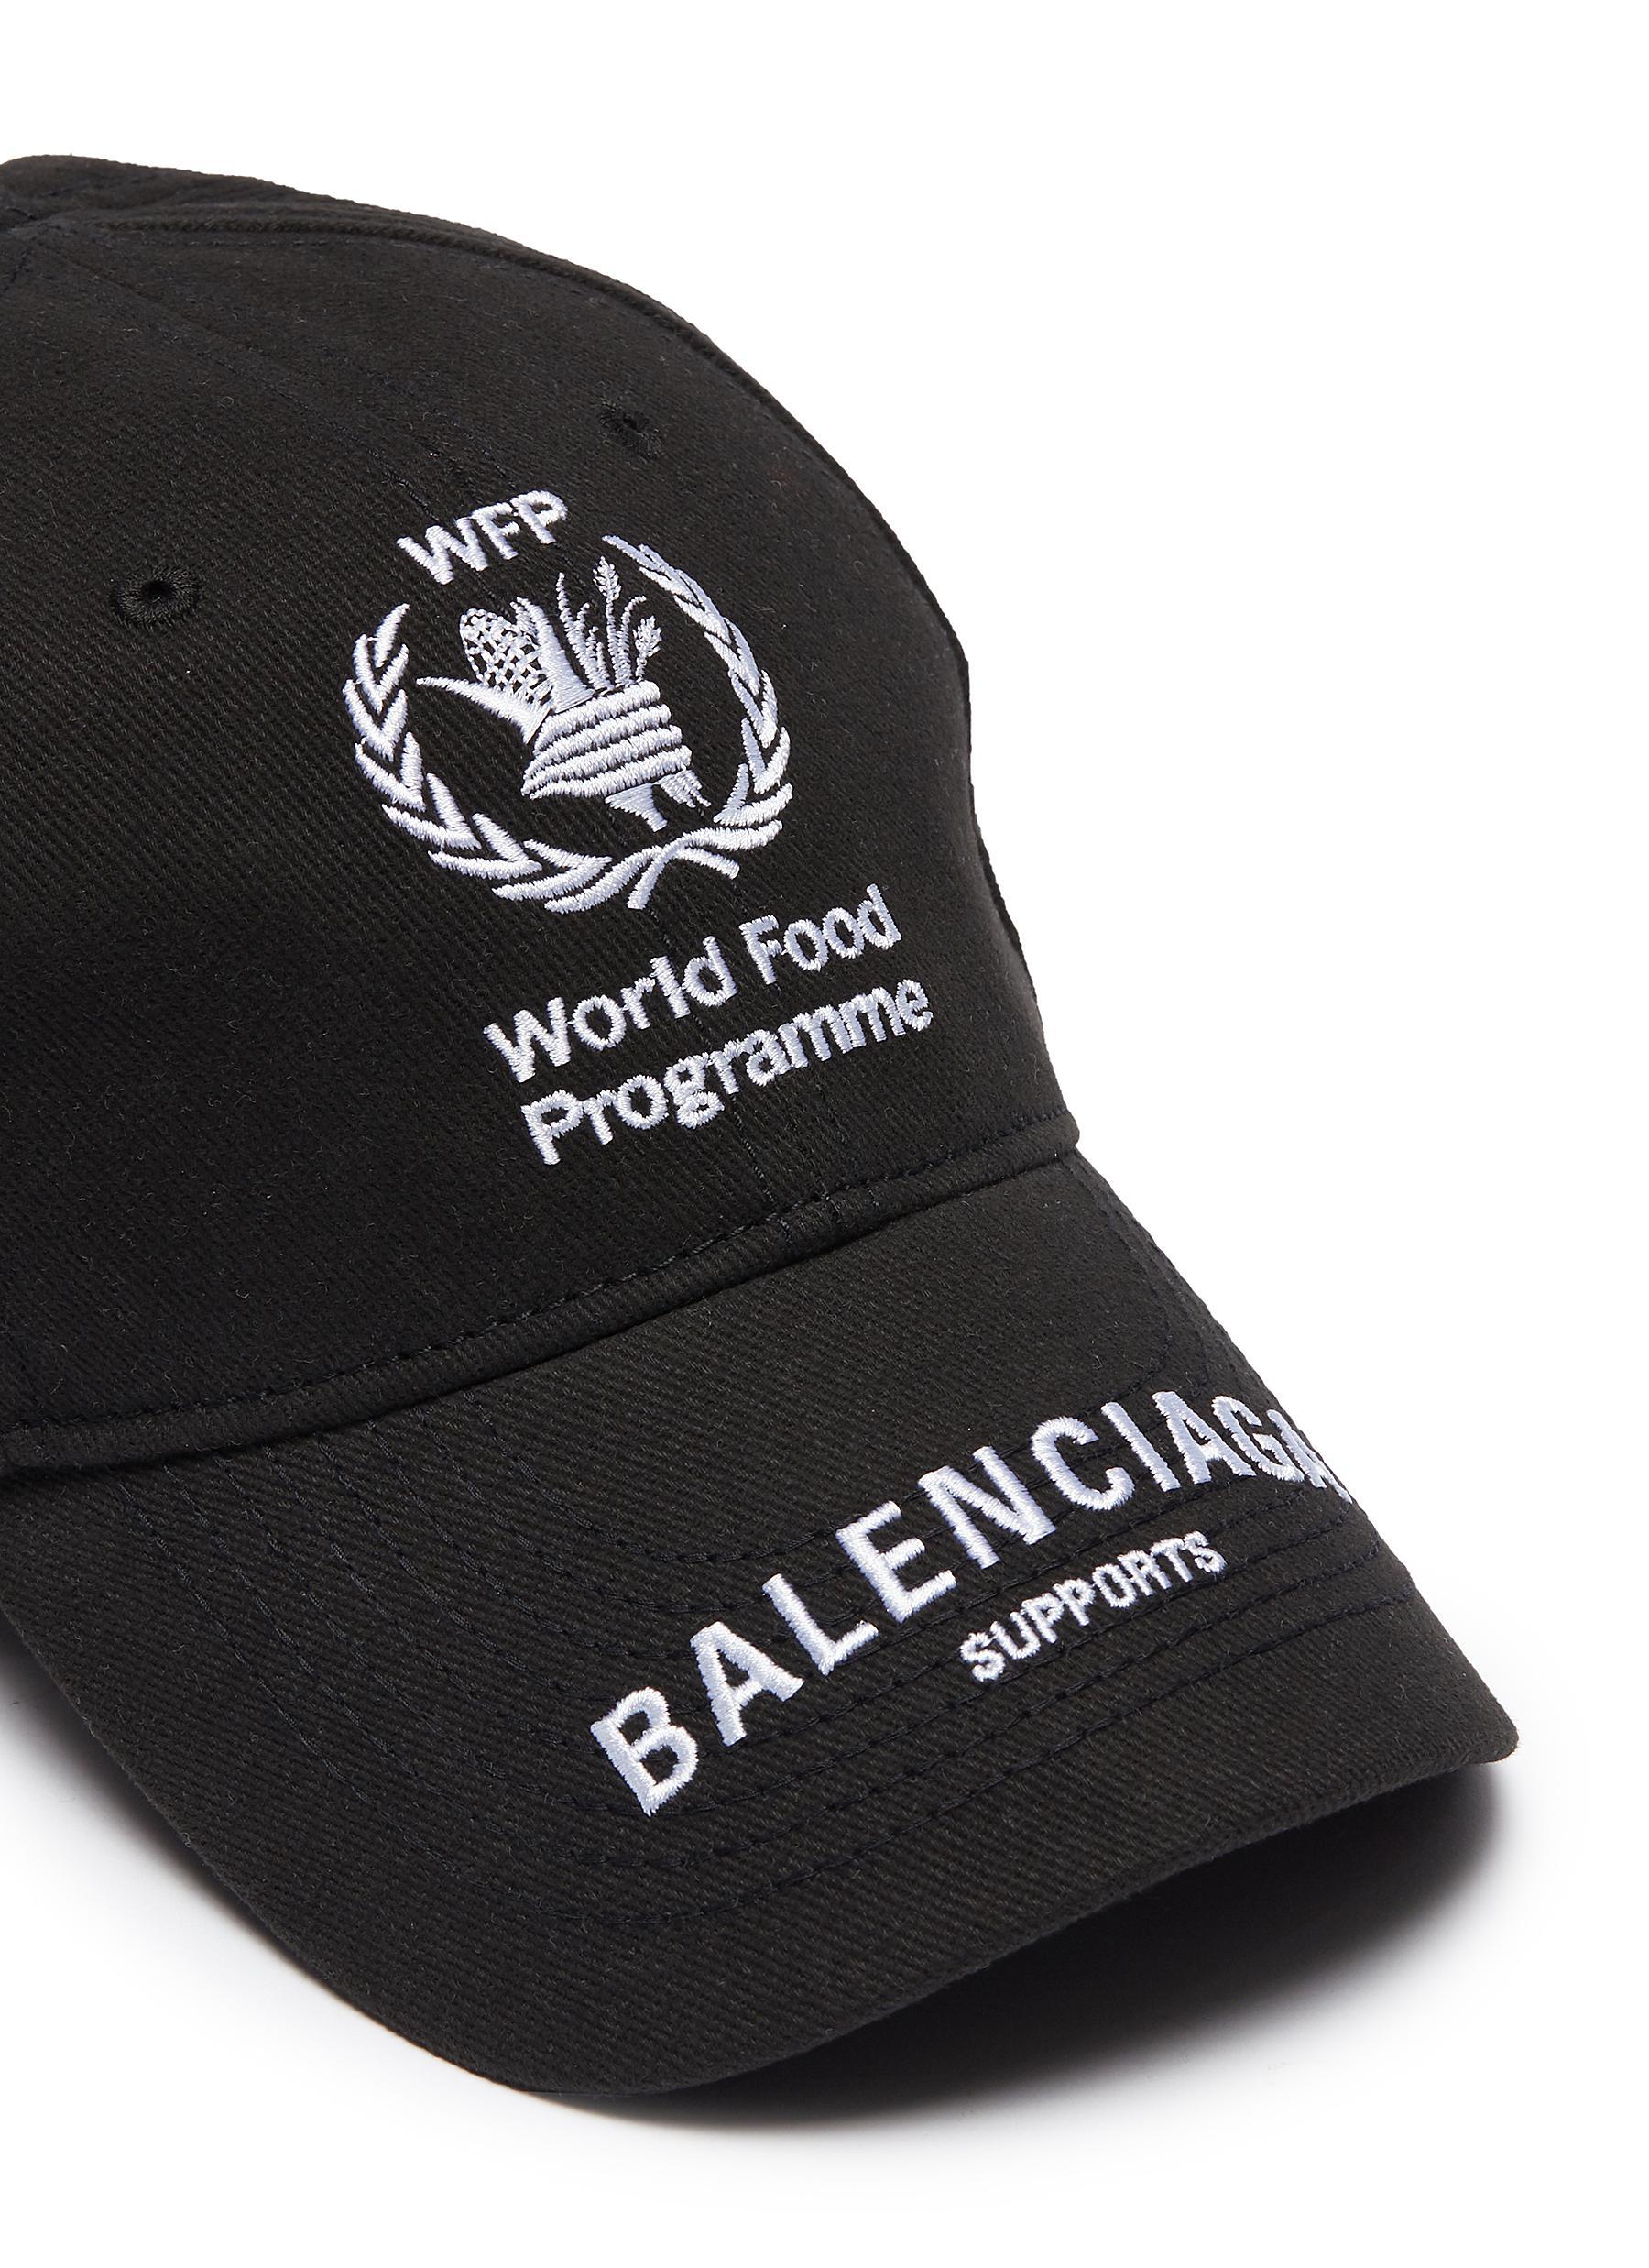 مجوهرات والعكس صحيح مركب world food programme balenciaga hat -  alterazioni.org